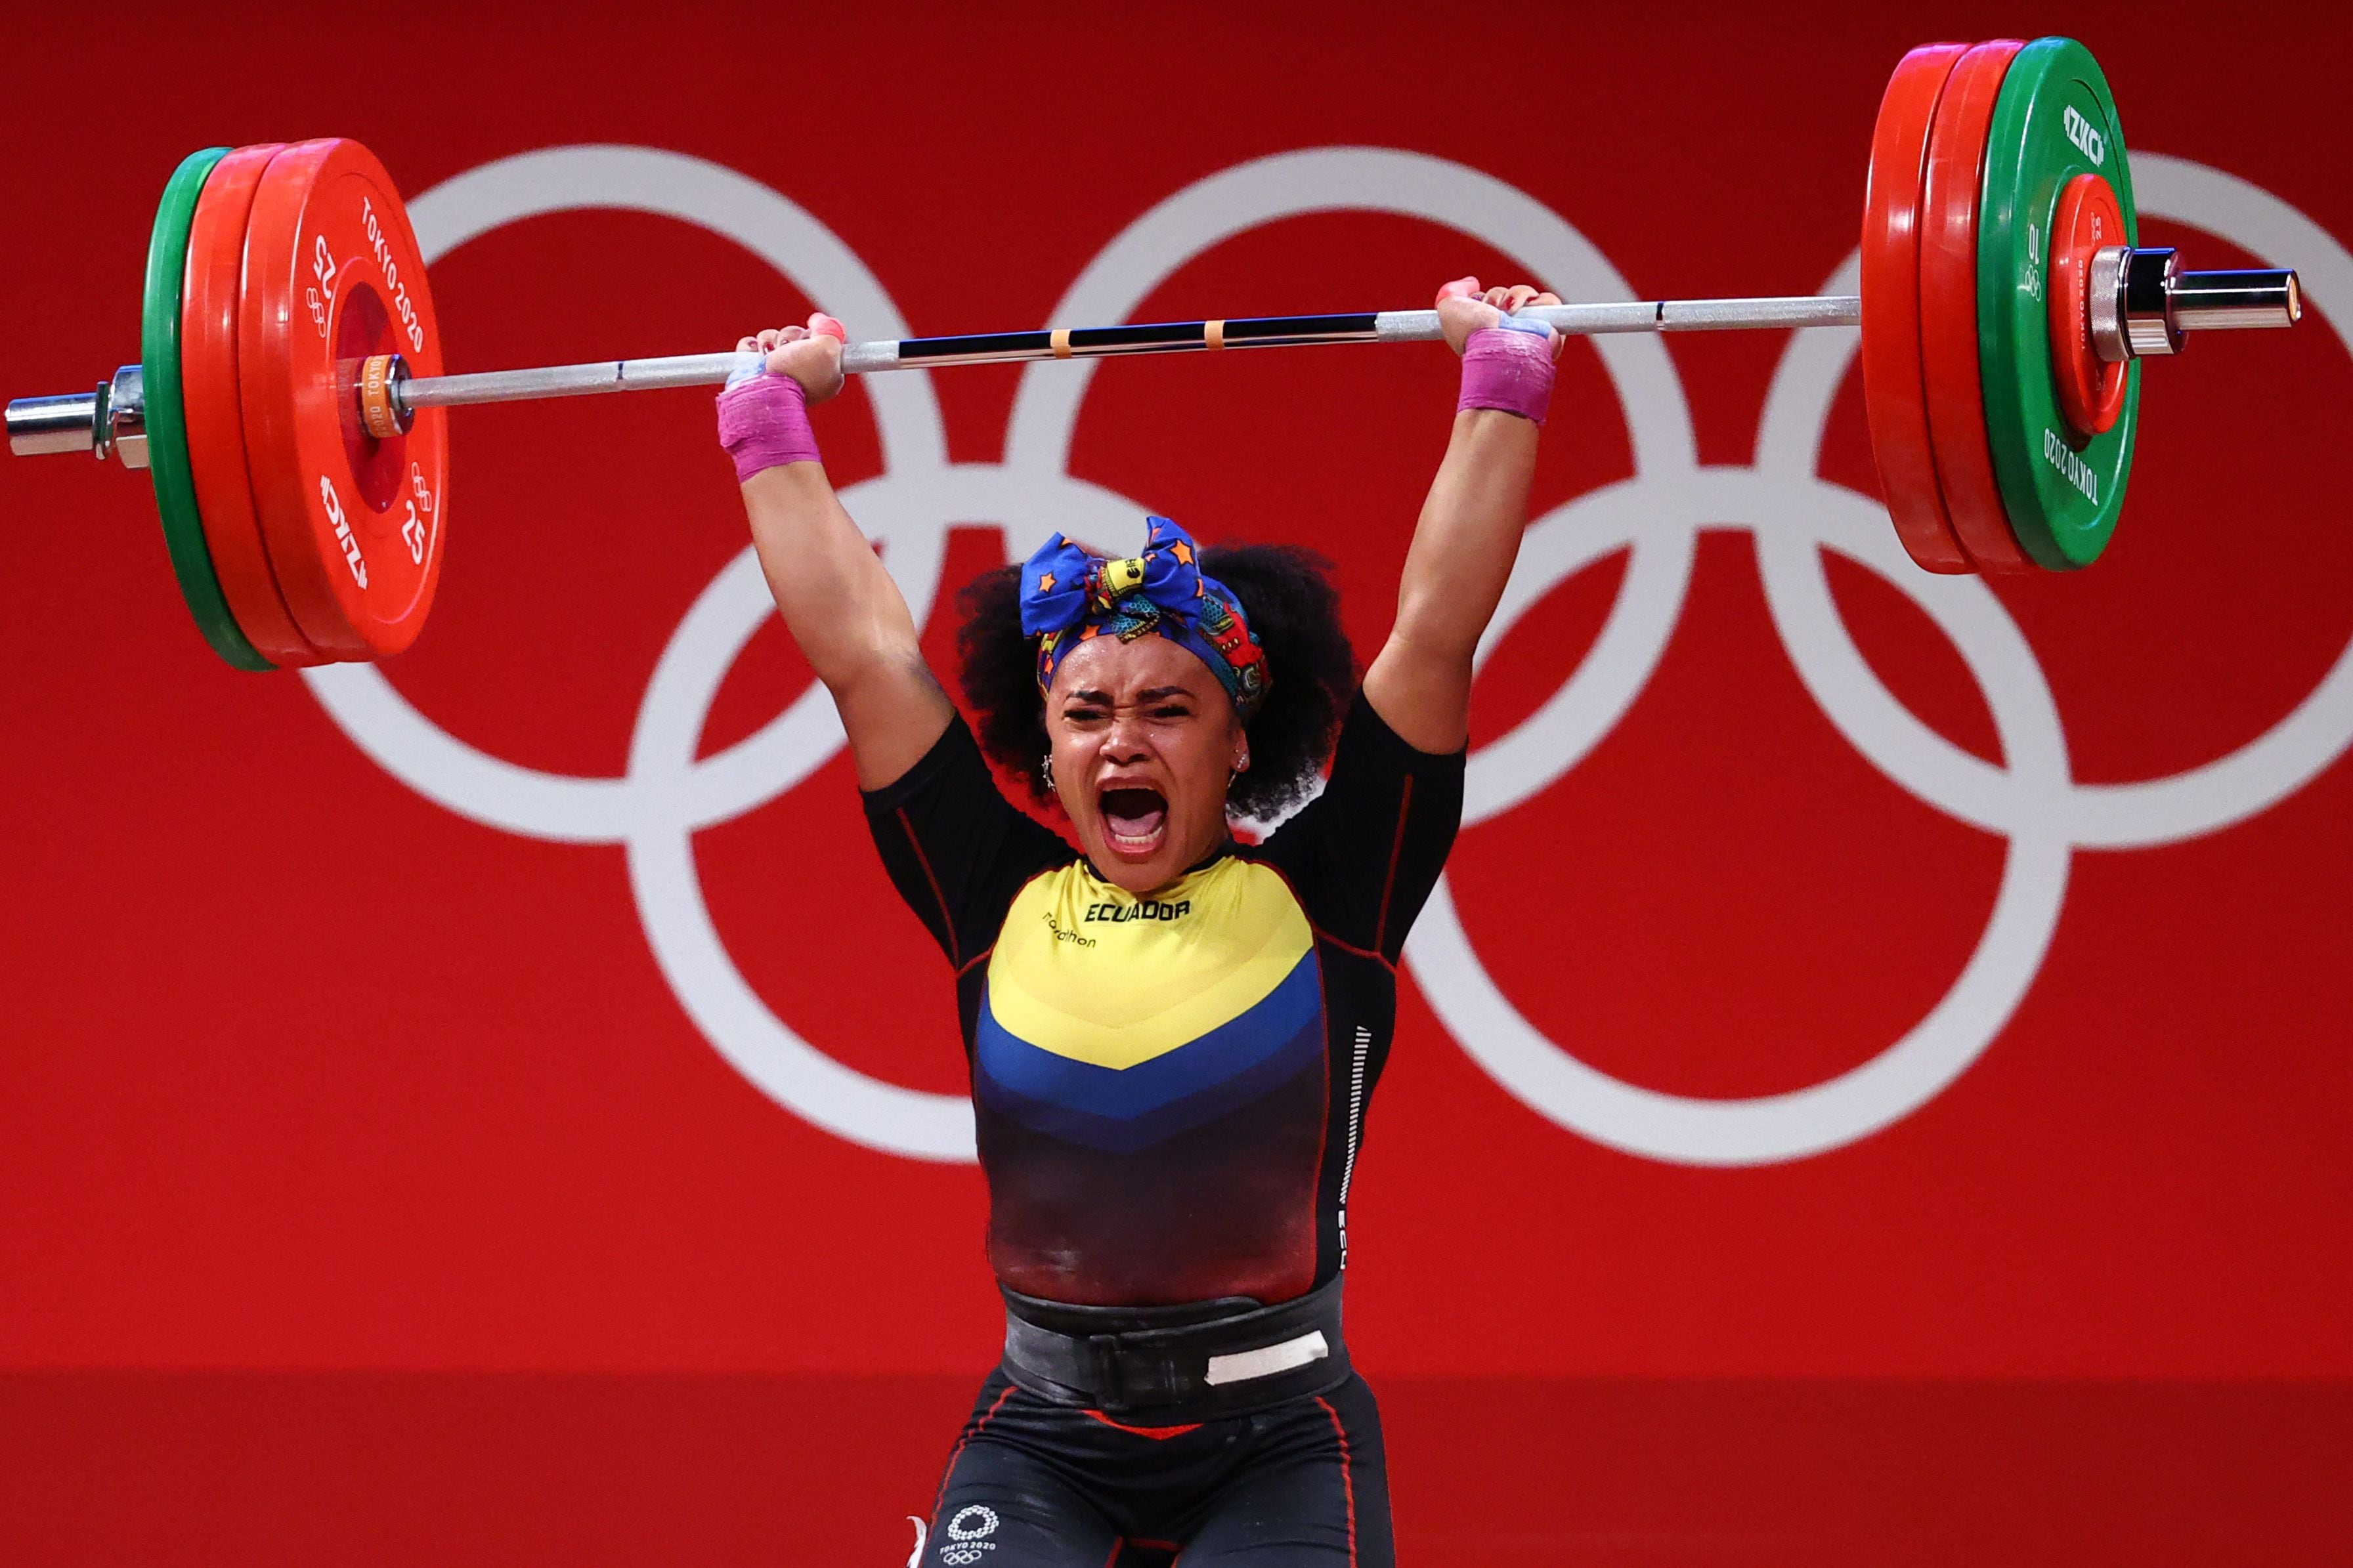 Ecuador women's national team champions' jerseys